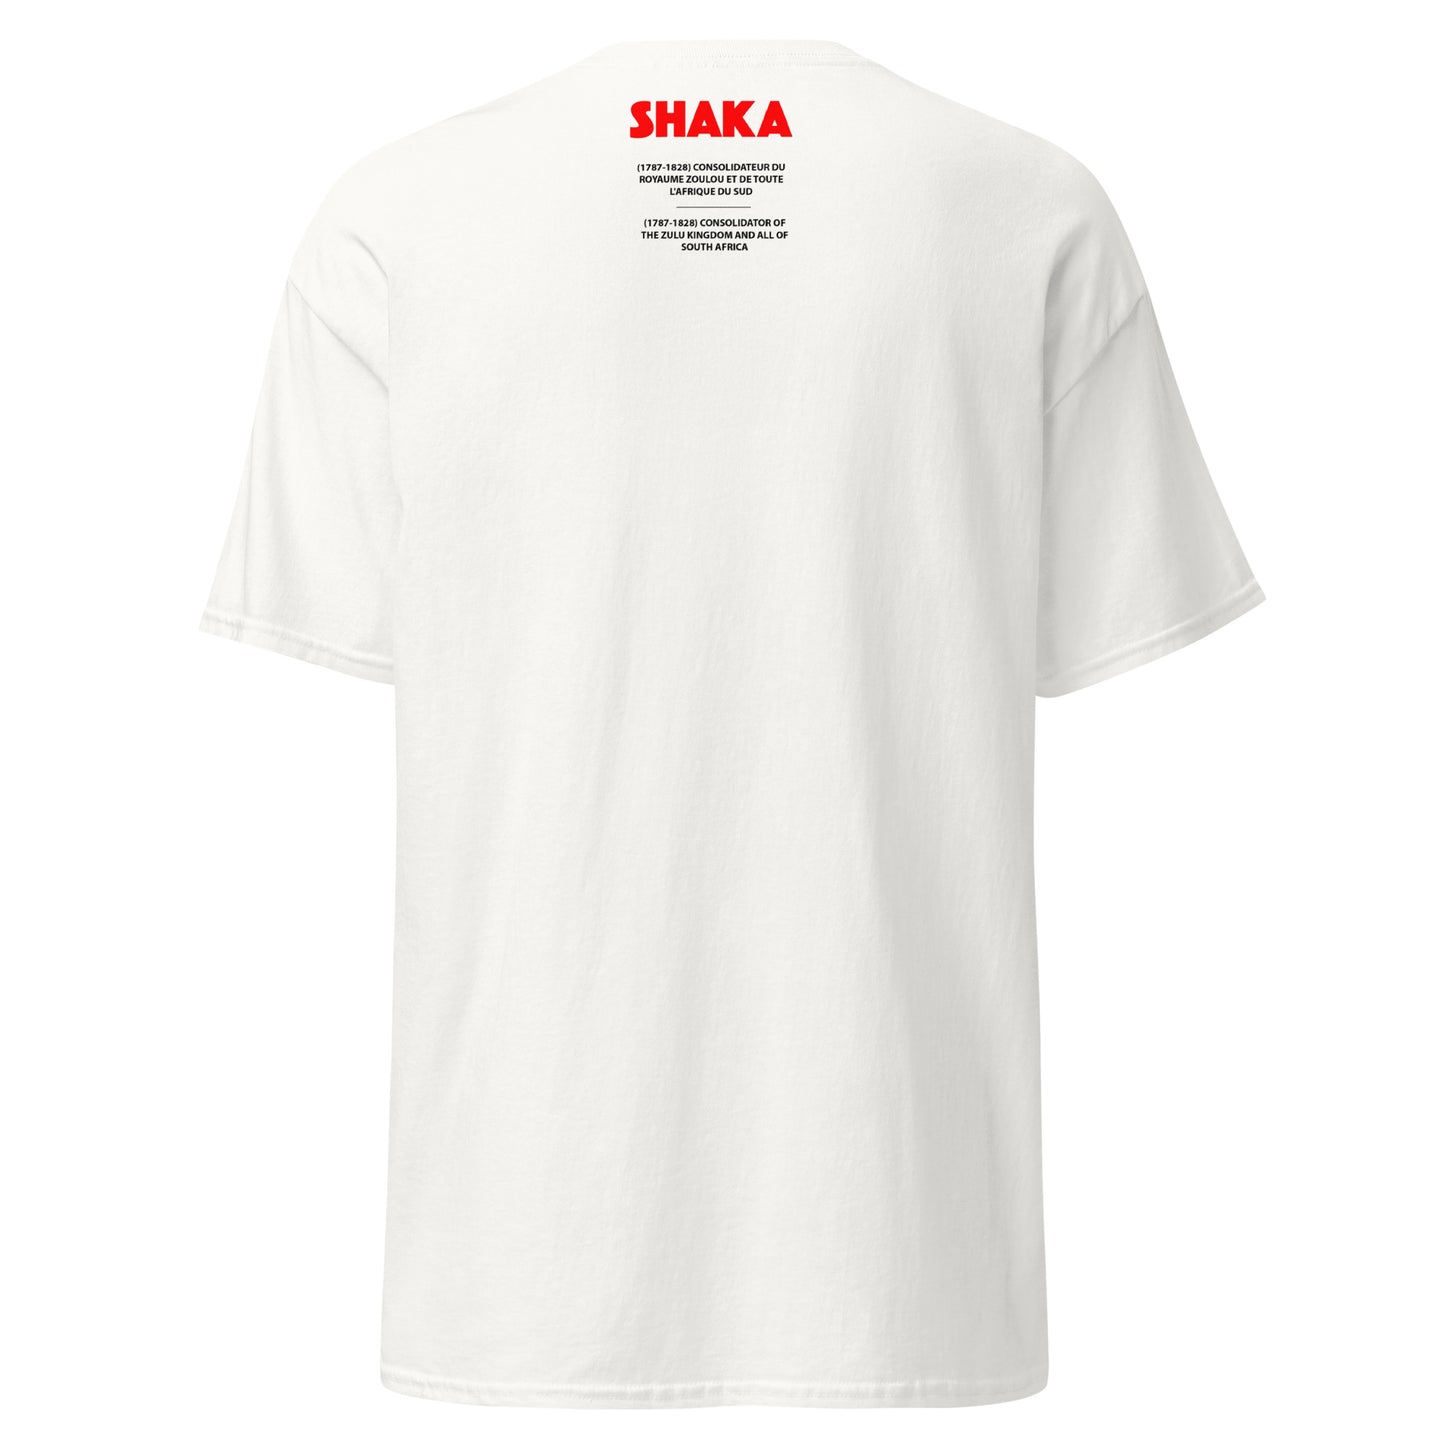 SHAKA (T-shirt)